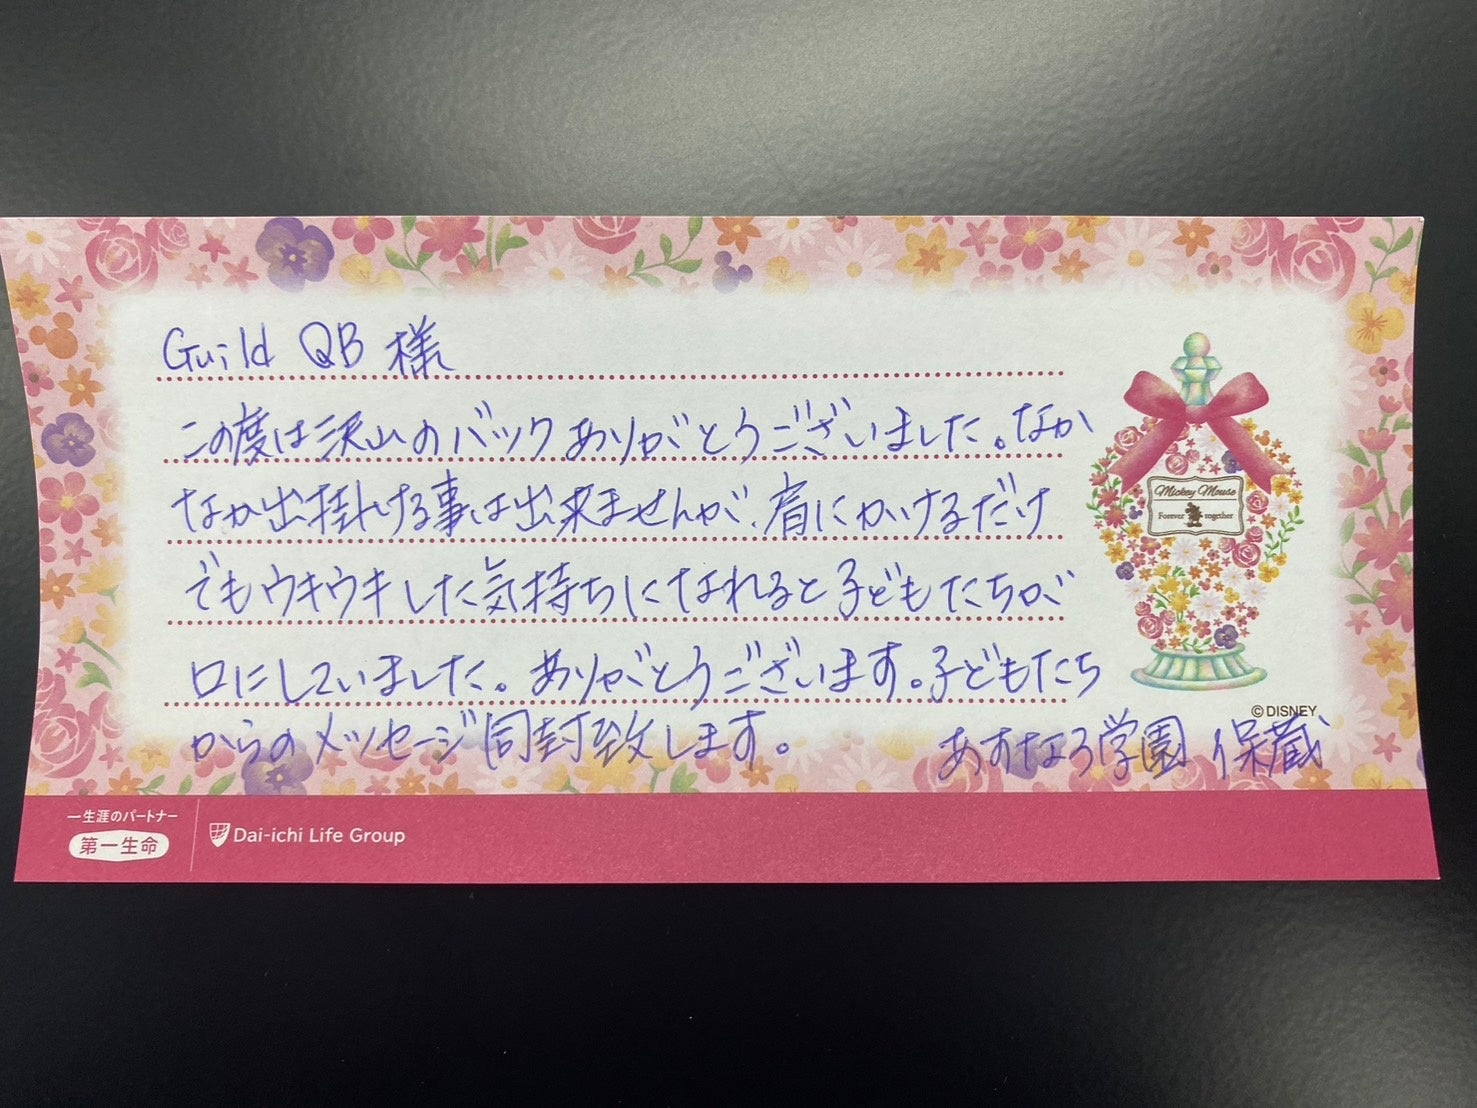 GuildQB、石川県の児童養護施設から感謝のお手紙をいただきました